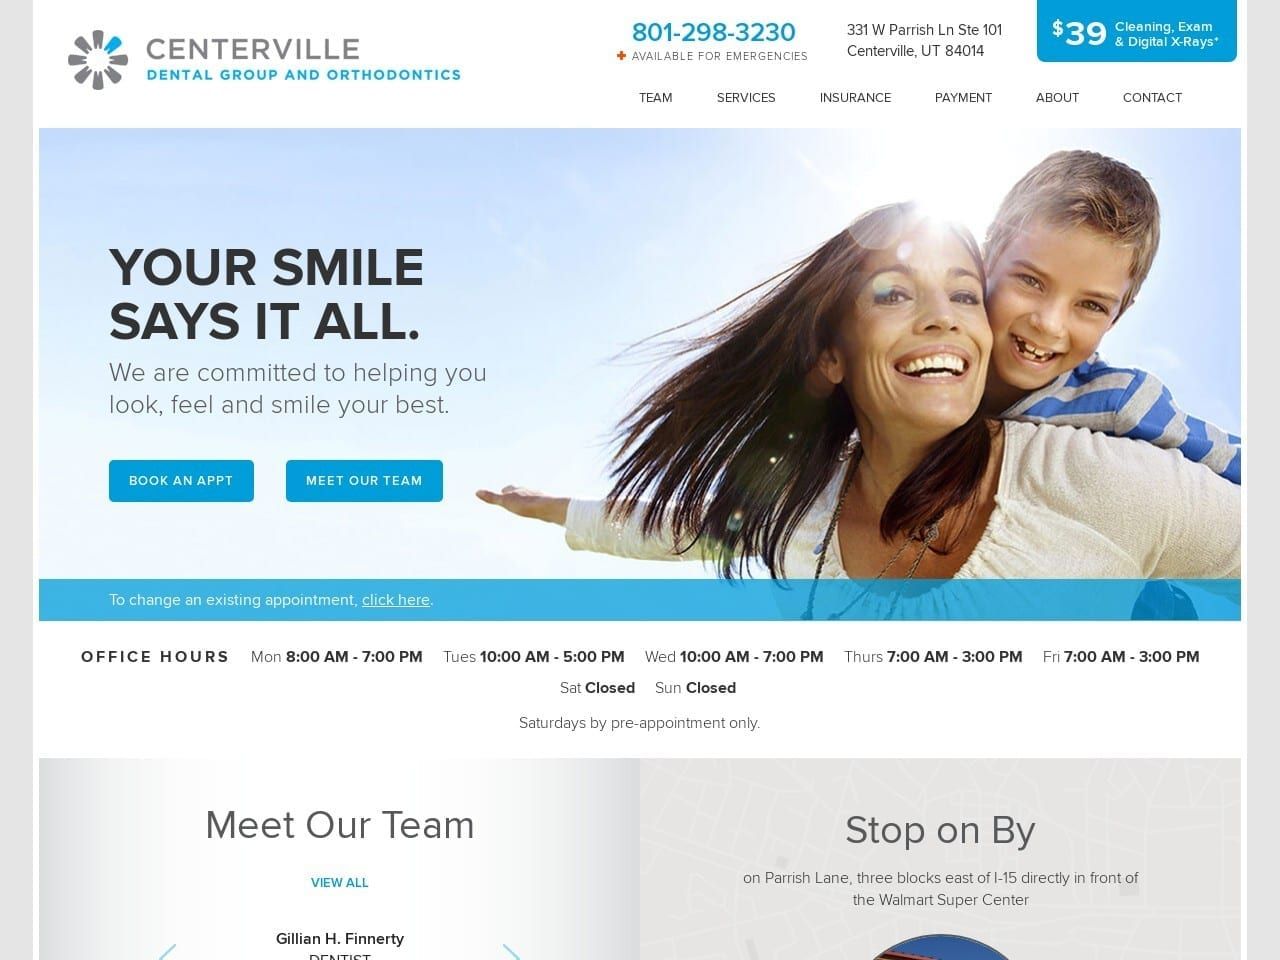 Centerville Dental Group and Orthodontics Website Screenshot from centervilledentalgroup.com